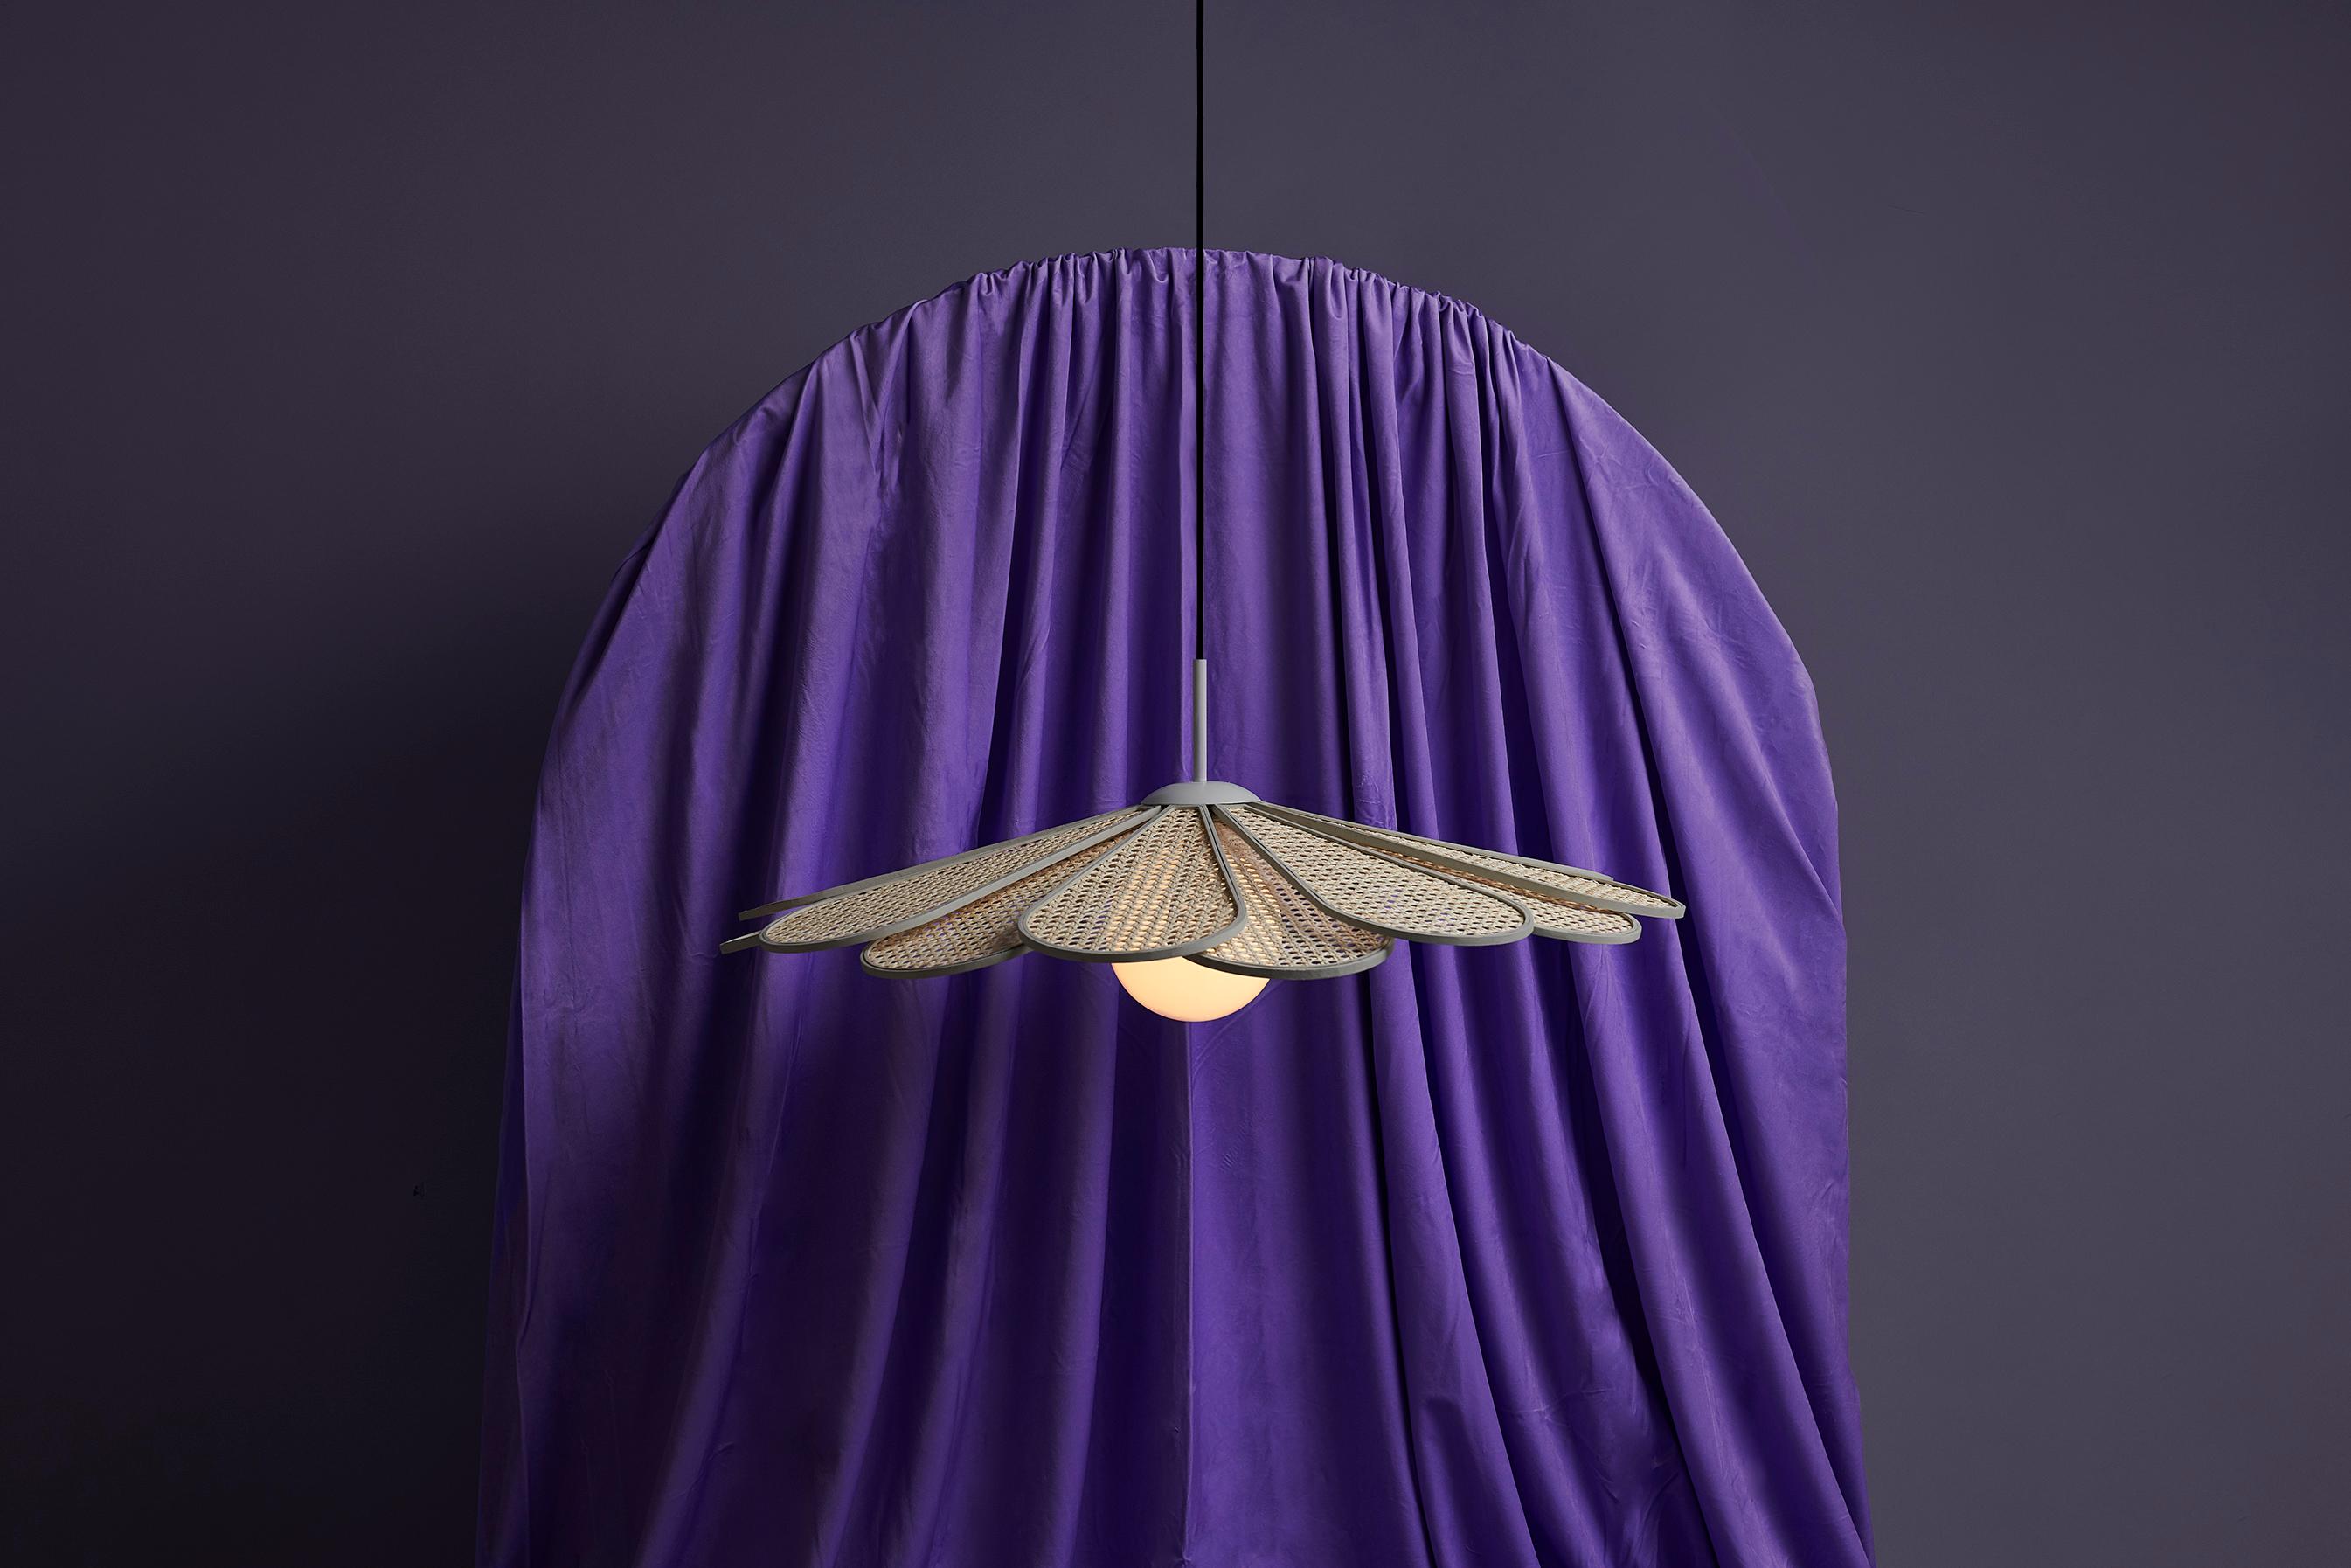 Metal Tropicana Ceiling Lamp by Serena Confalonieri